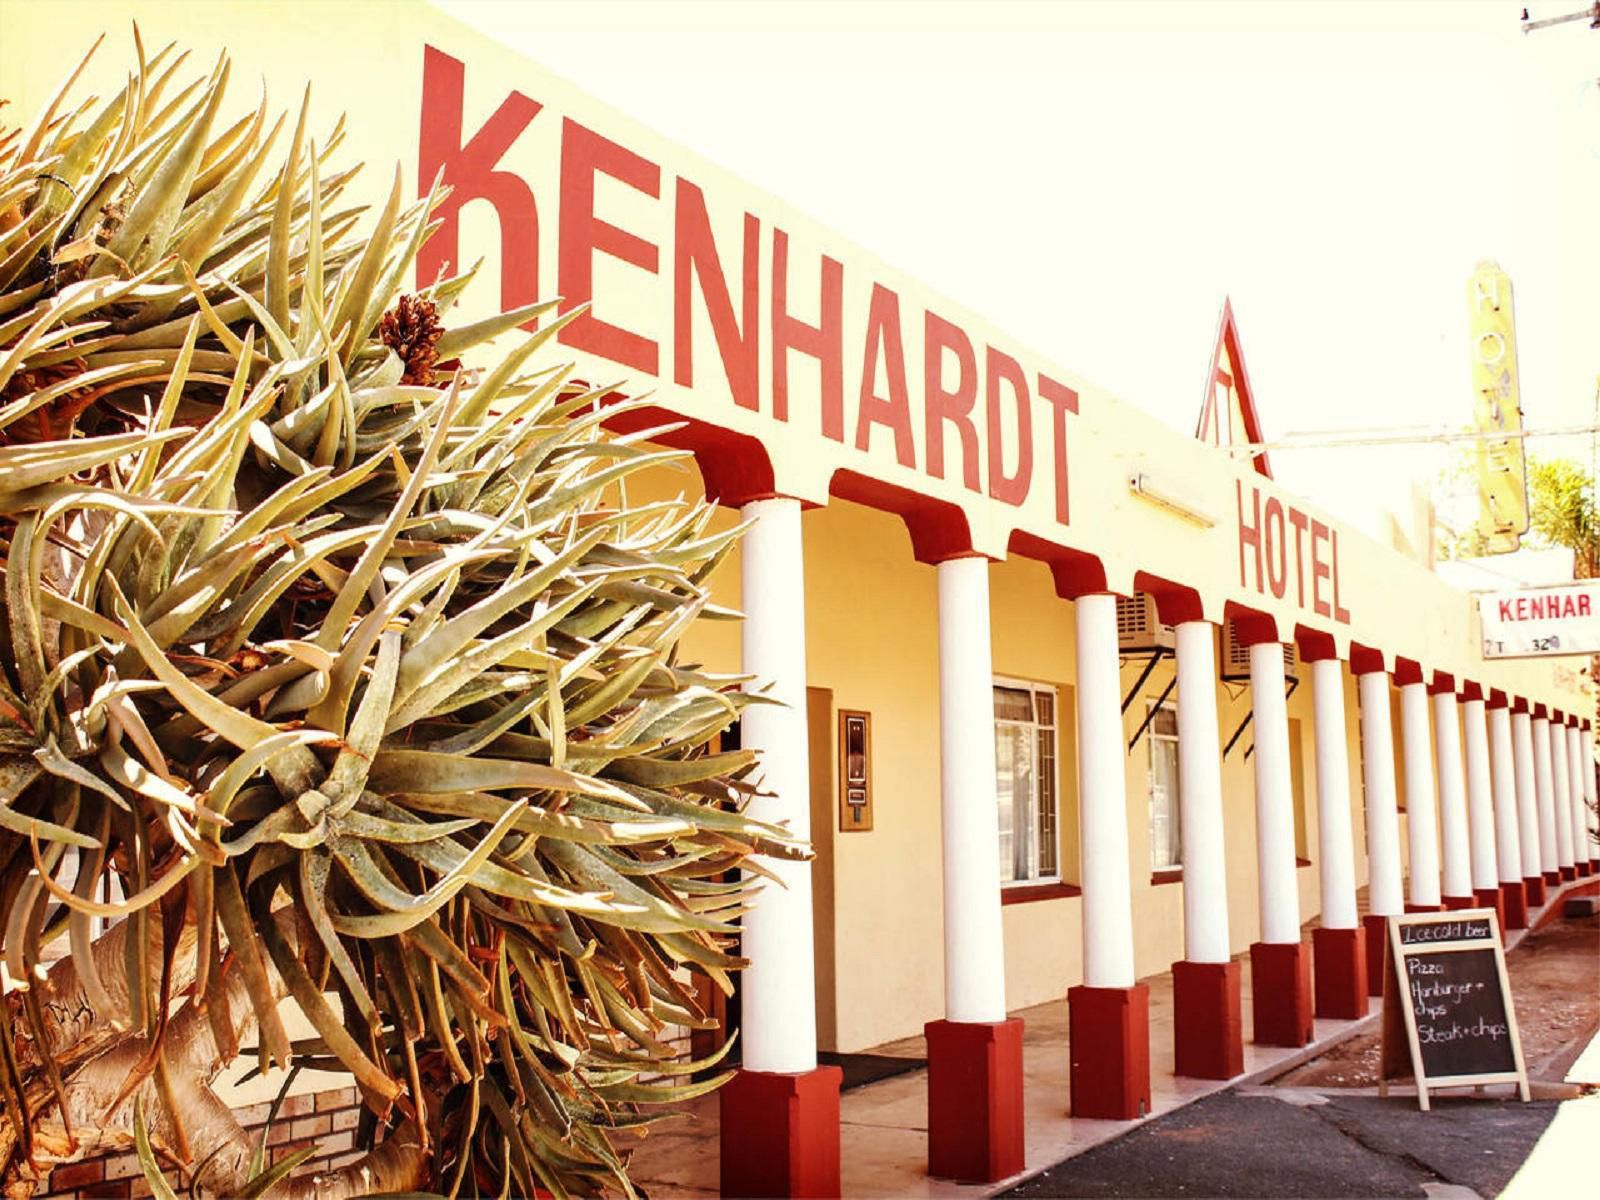 Kenhardt Hotel Kenhardt Northern Cape South Africa Colorful